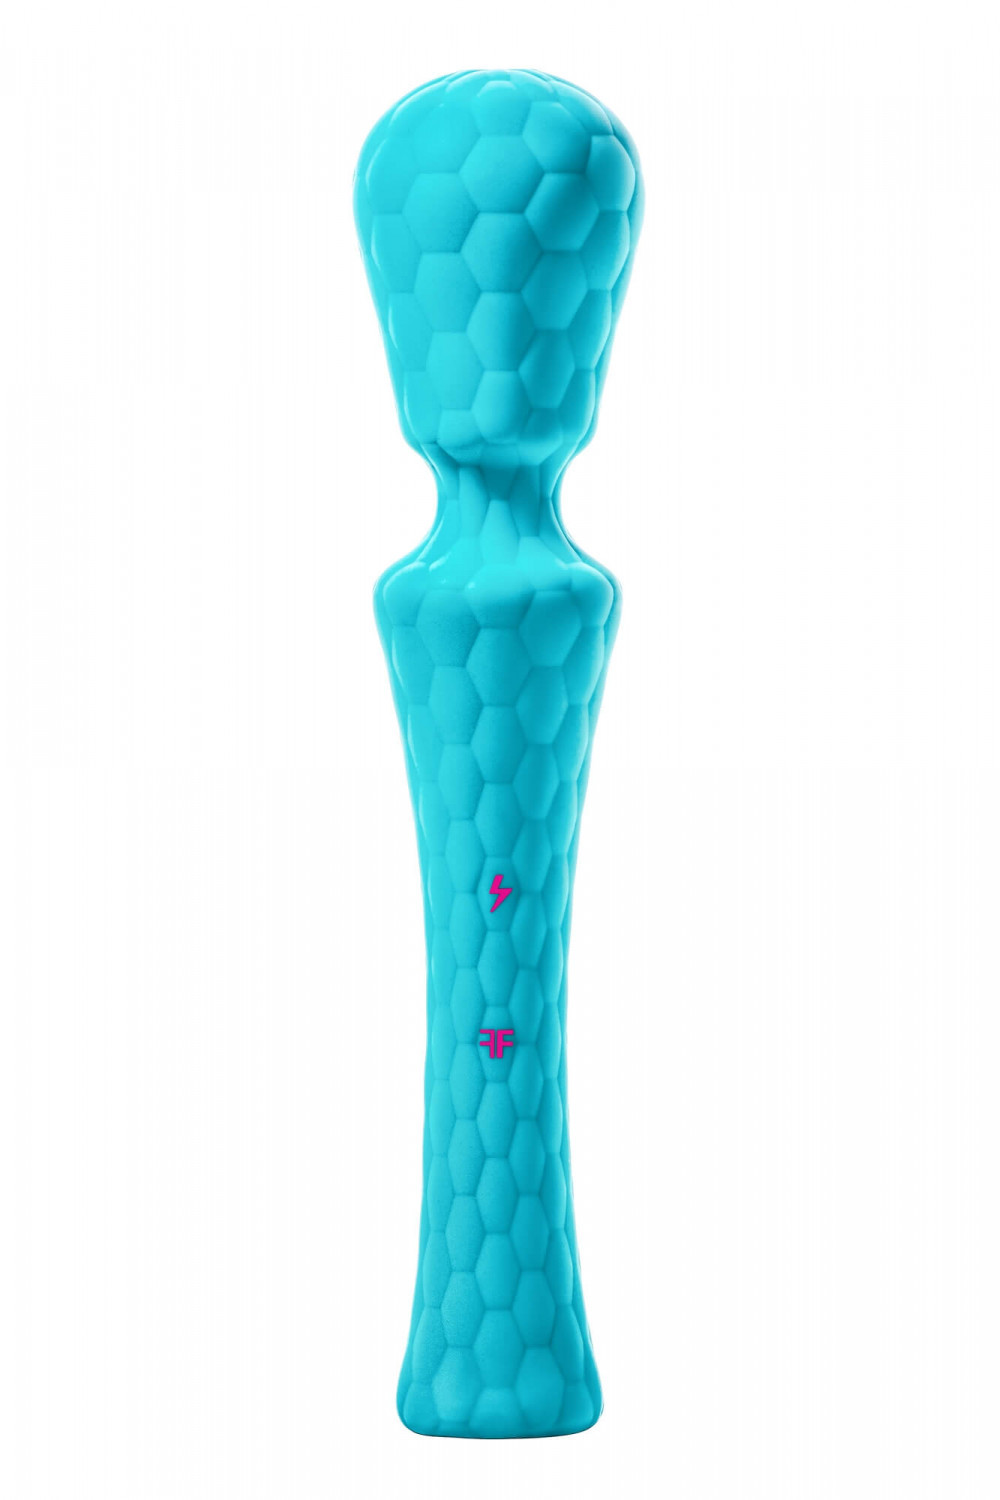 FemmeFunn Ultra Wand XL - premium cordless massager vibrator (turquoise)